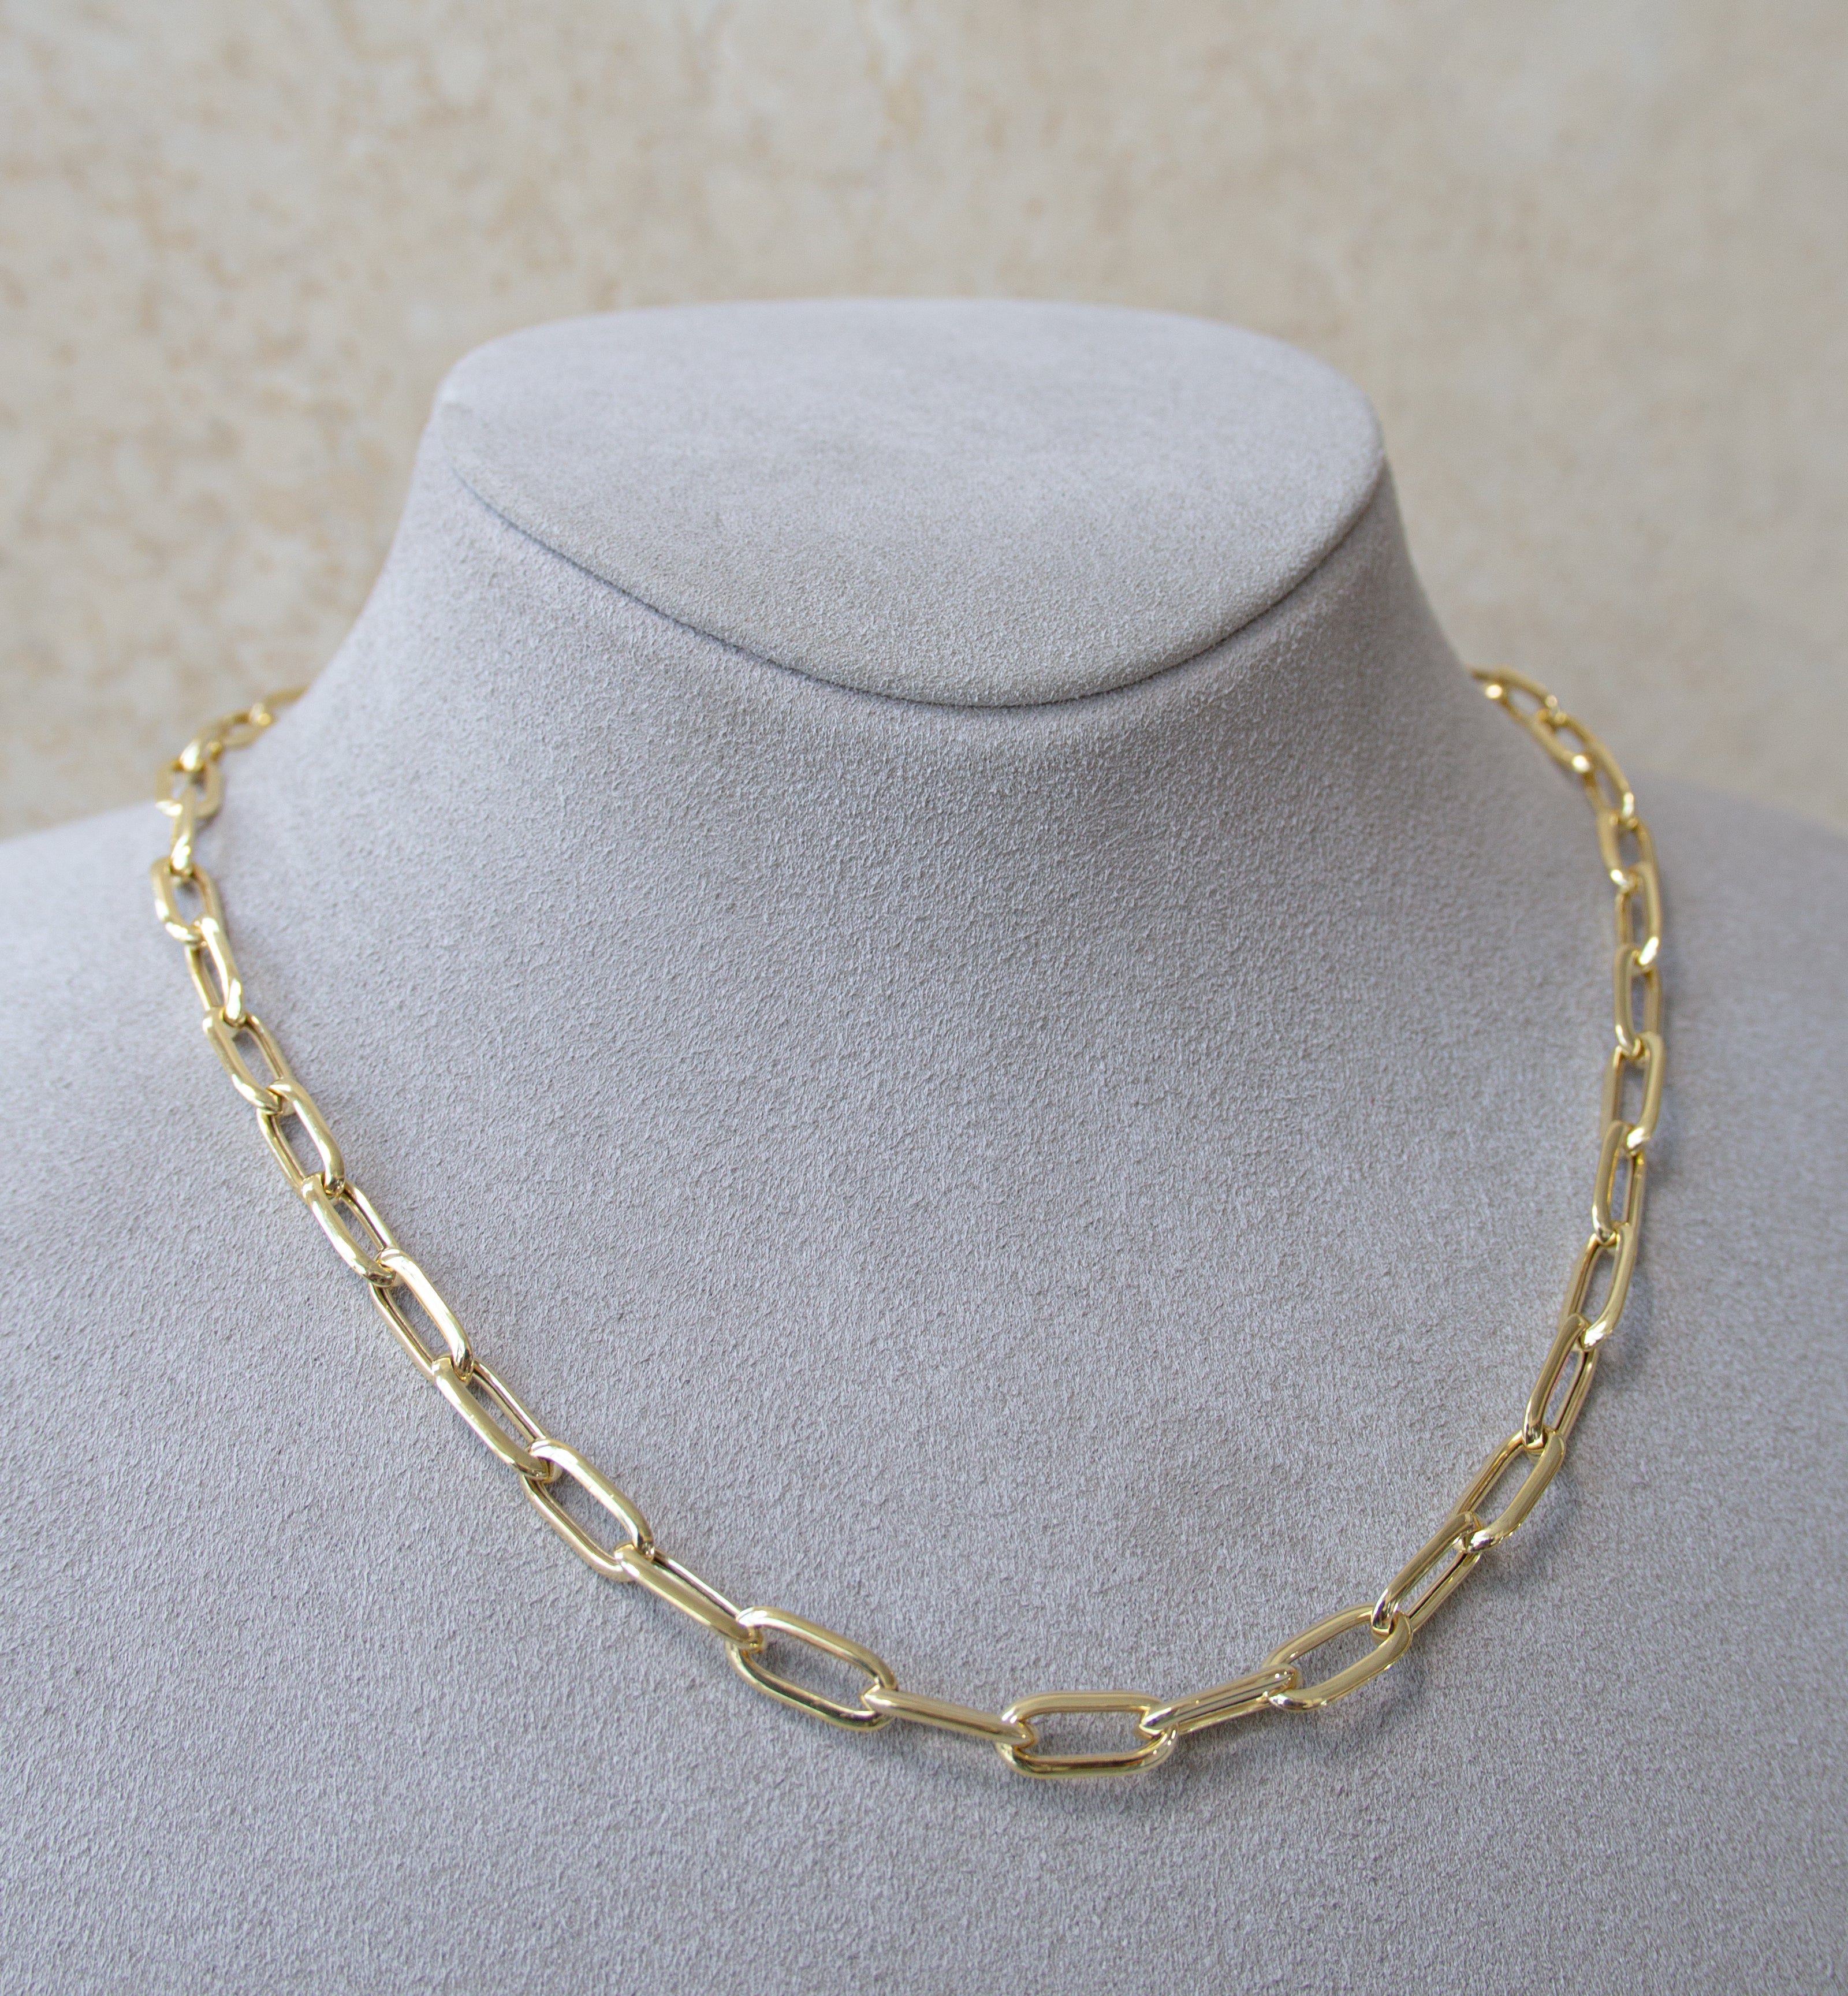 Silver 925 Link Necklace